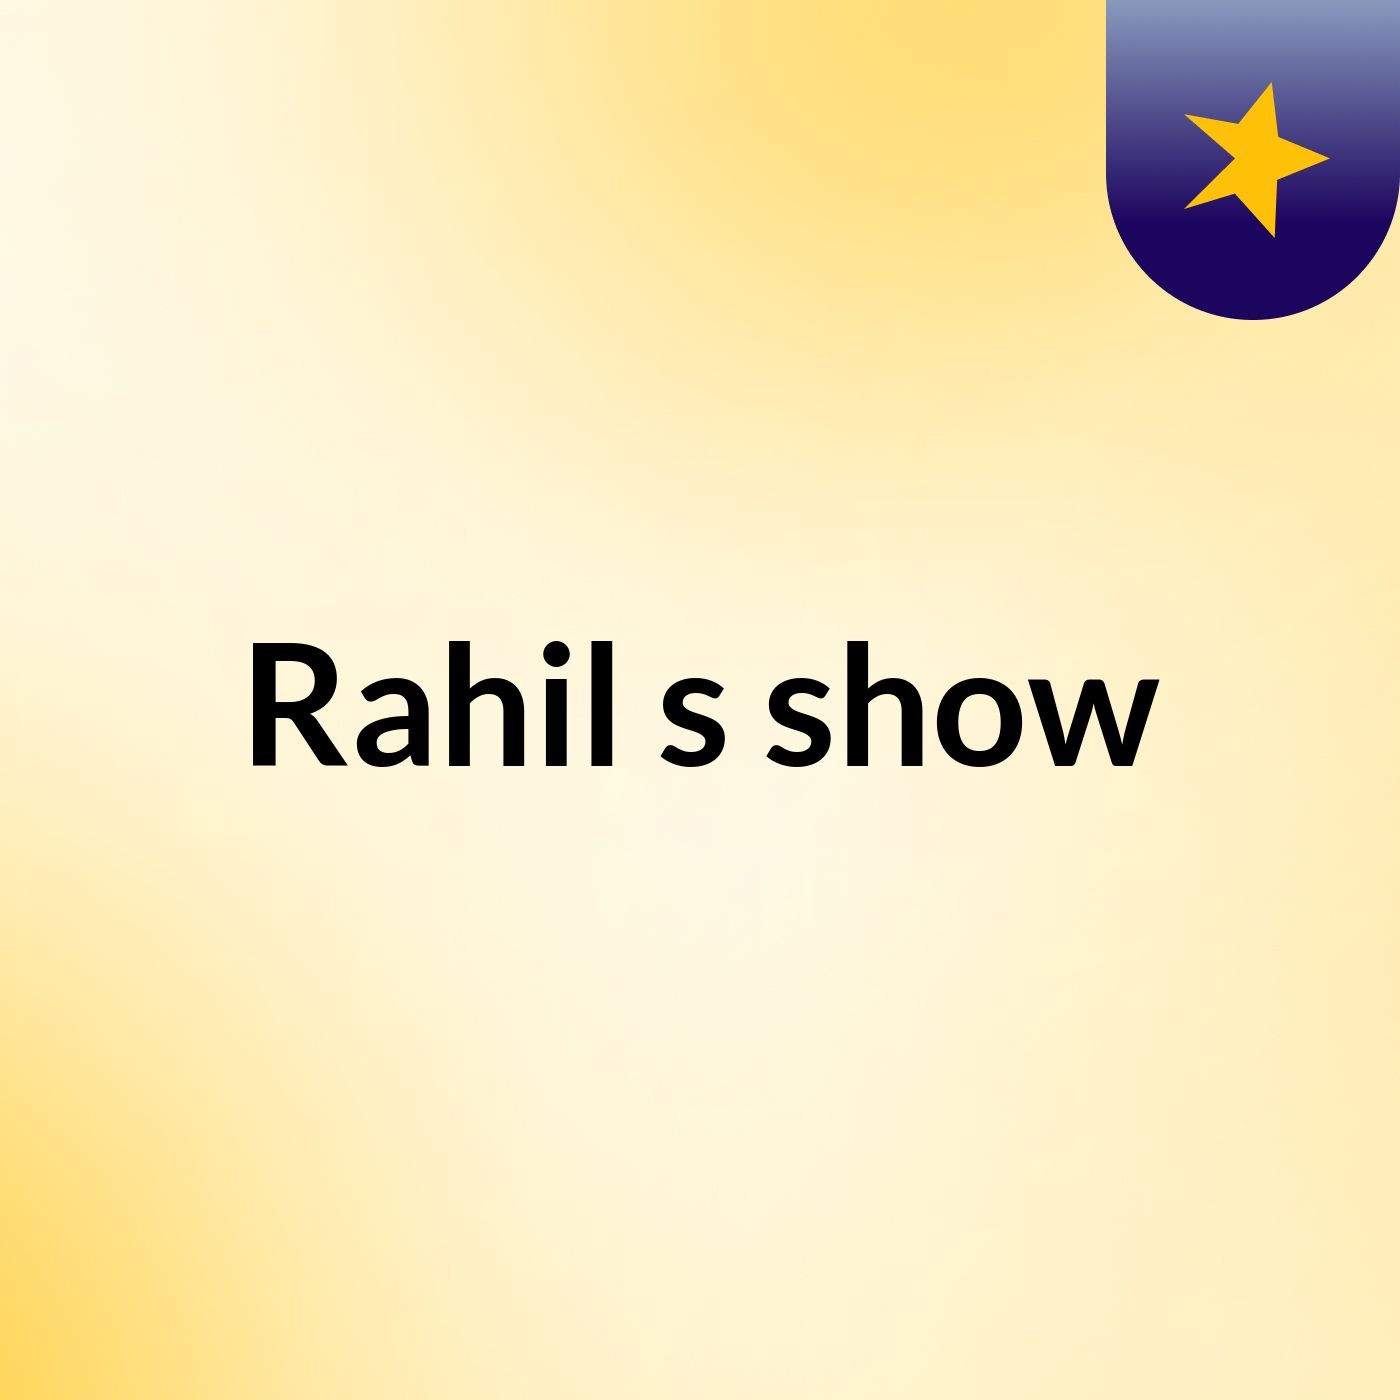 Rahil's show